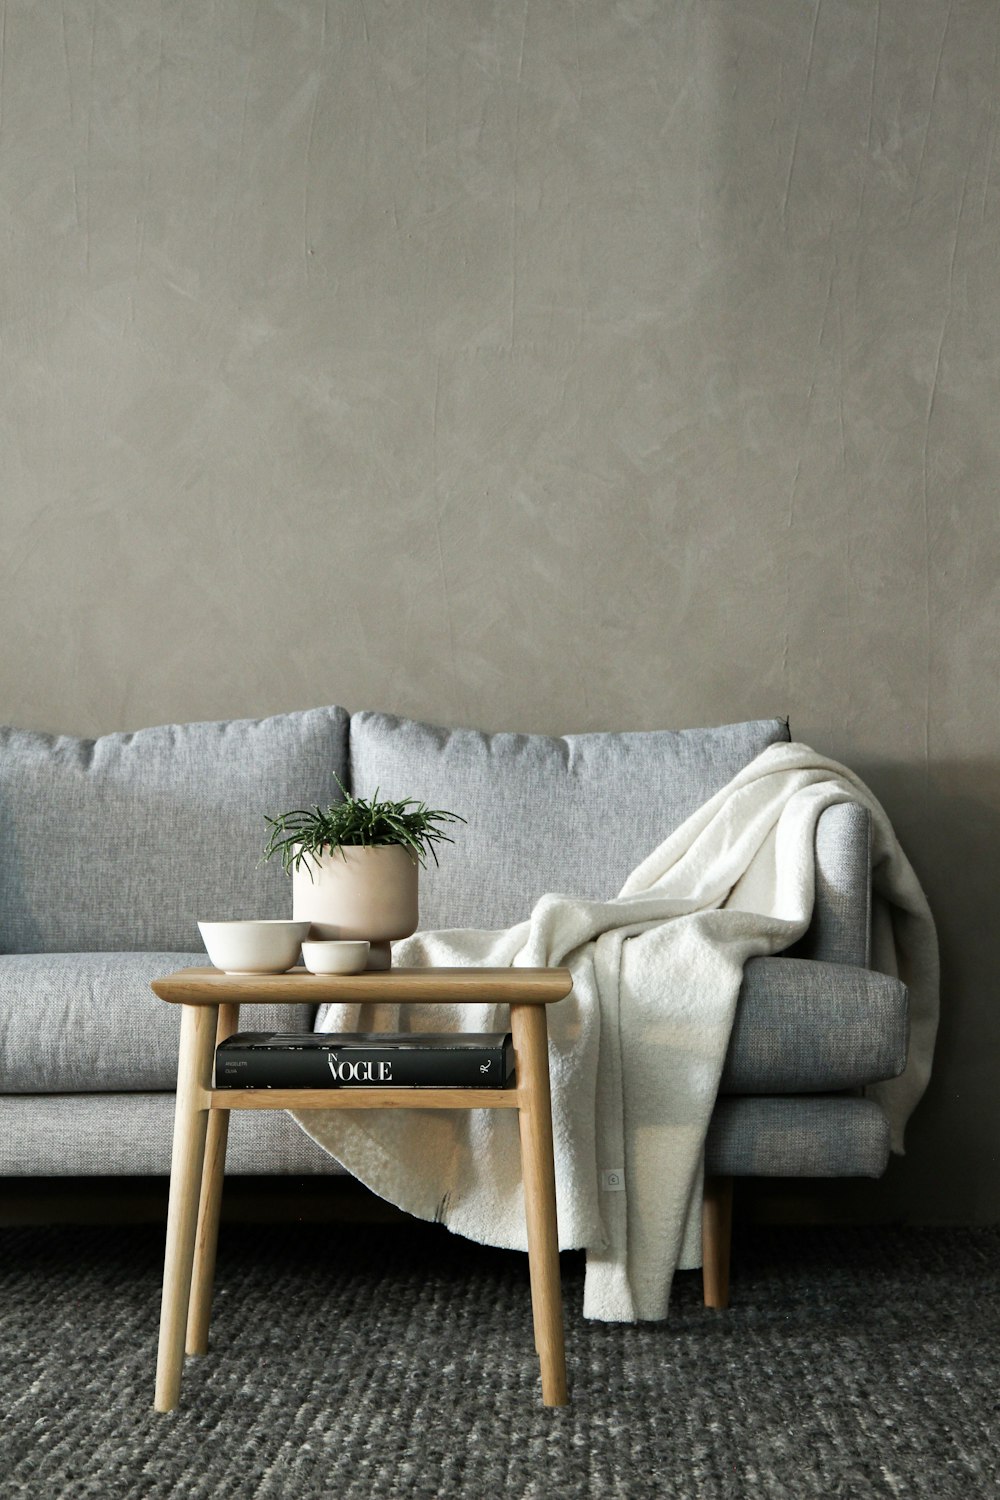 gray sofa with white towel